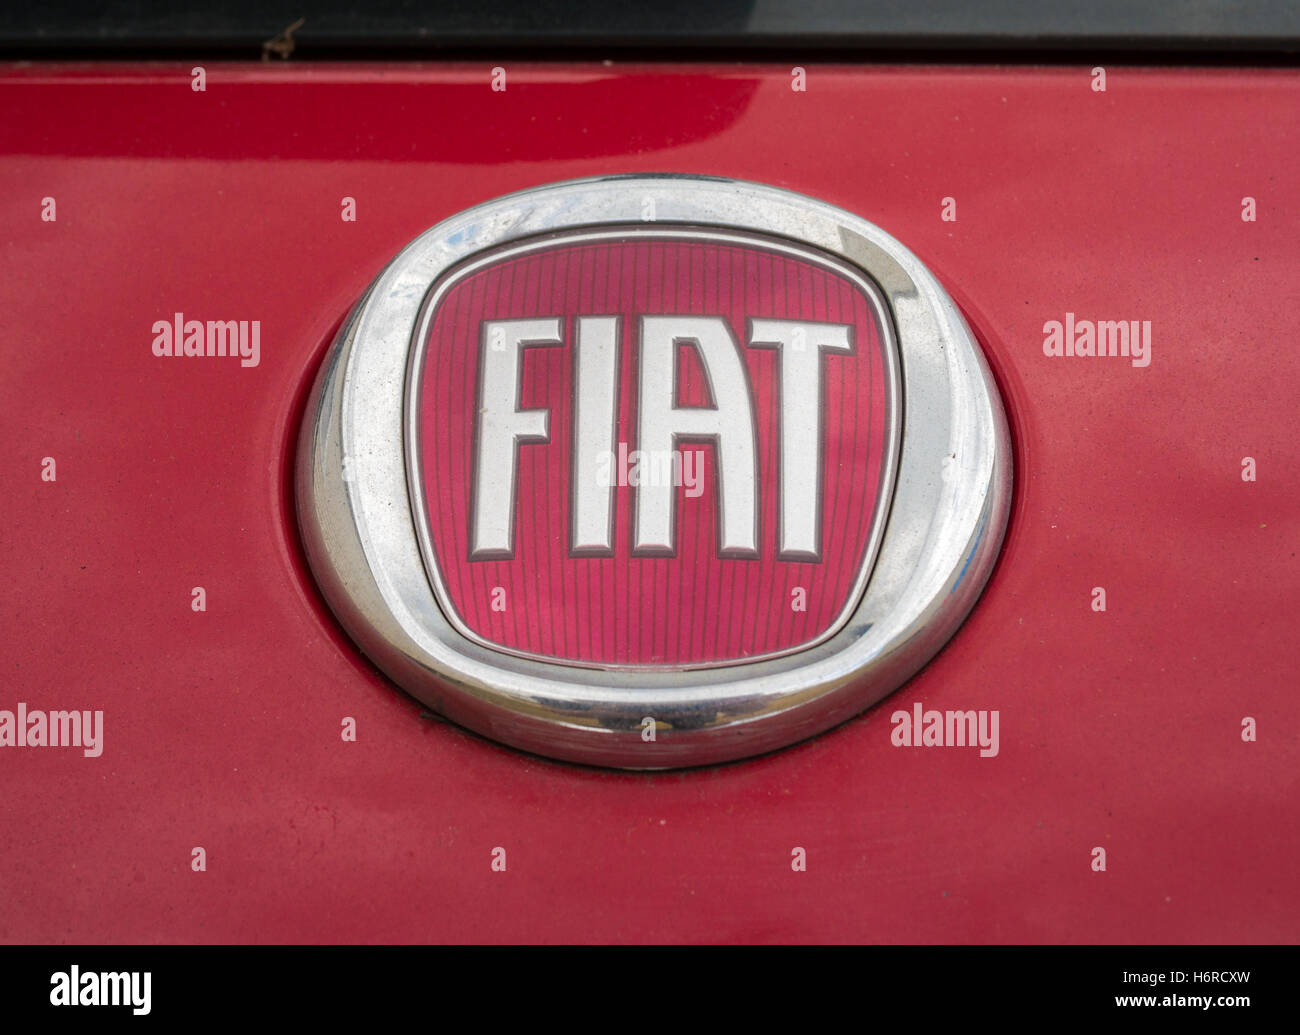 Fiat car badge -Fotos und -Bildmaterial in hoher Auflösung – Alamy